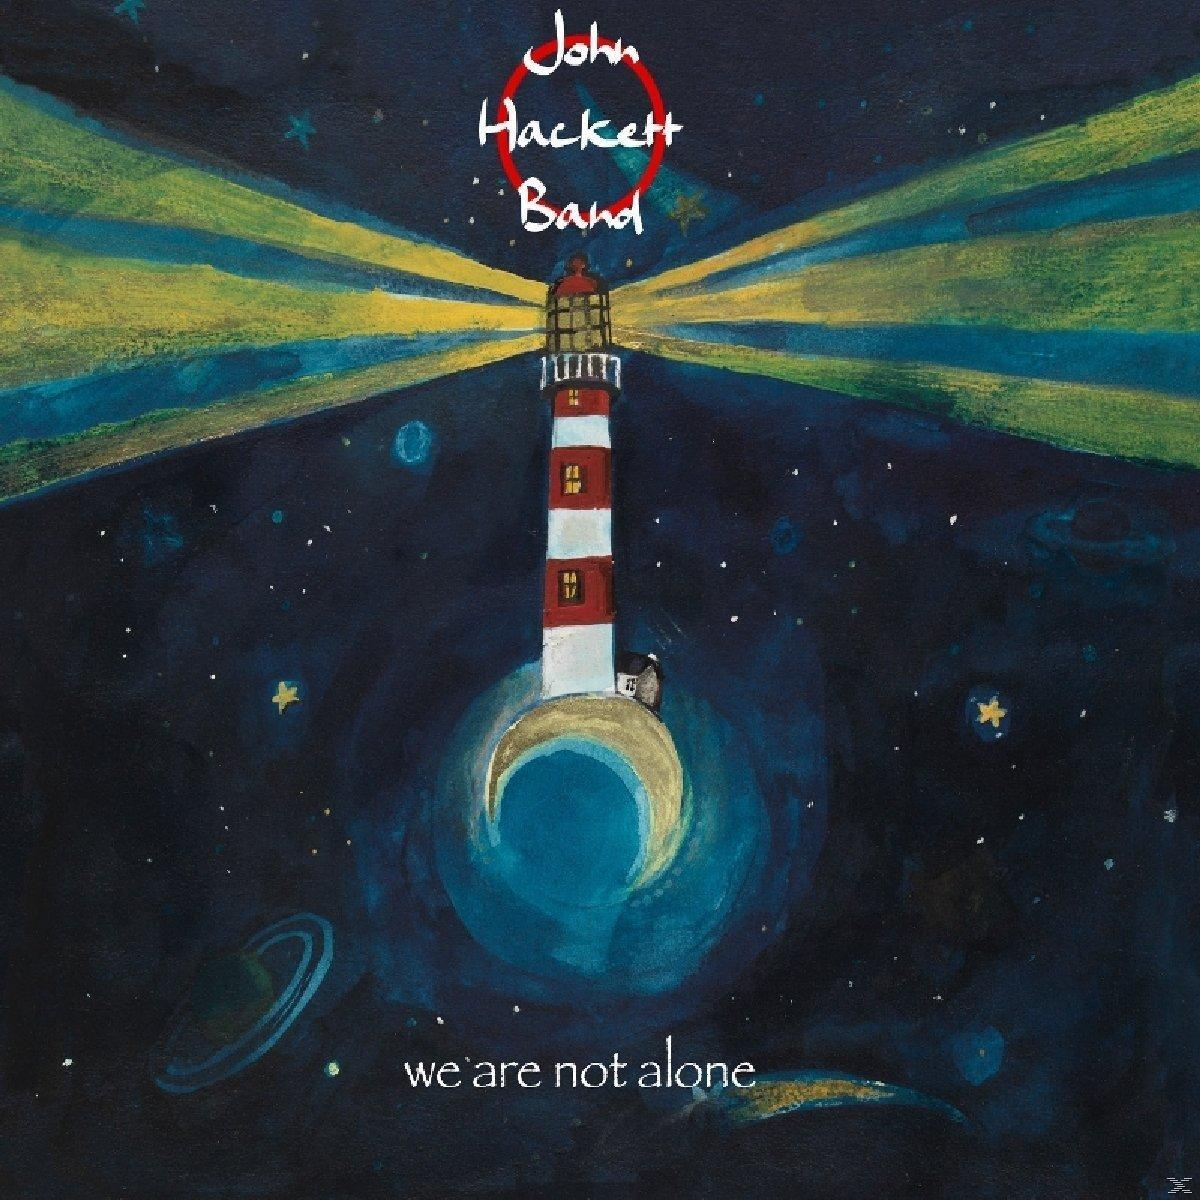 John -band- Hackett - (CD) We - Alone Not Are